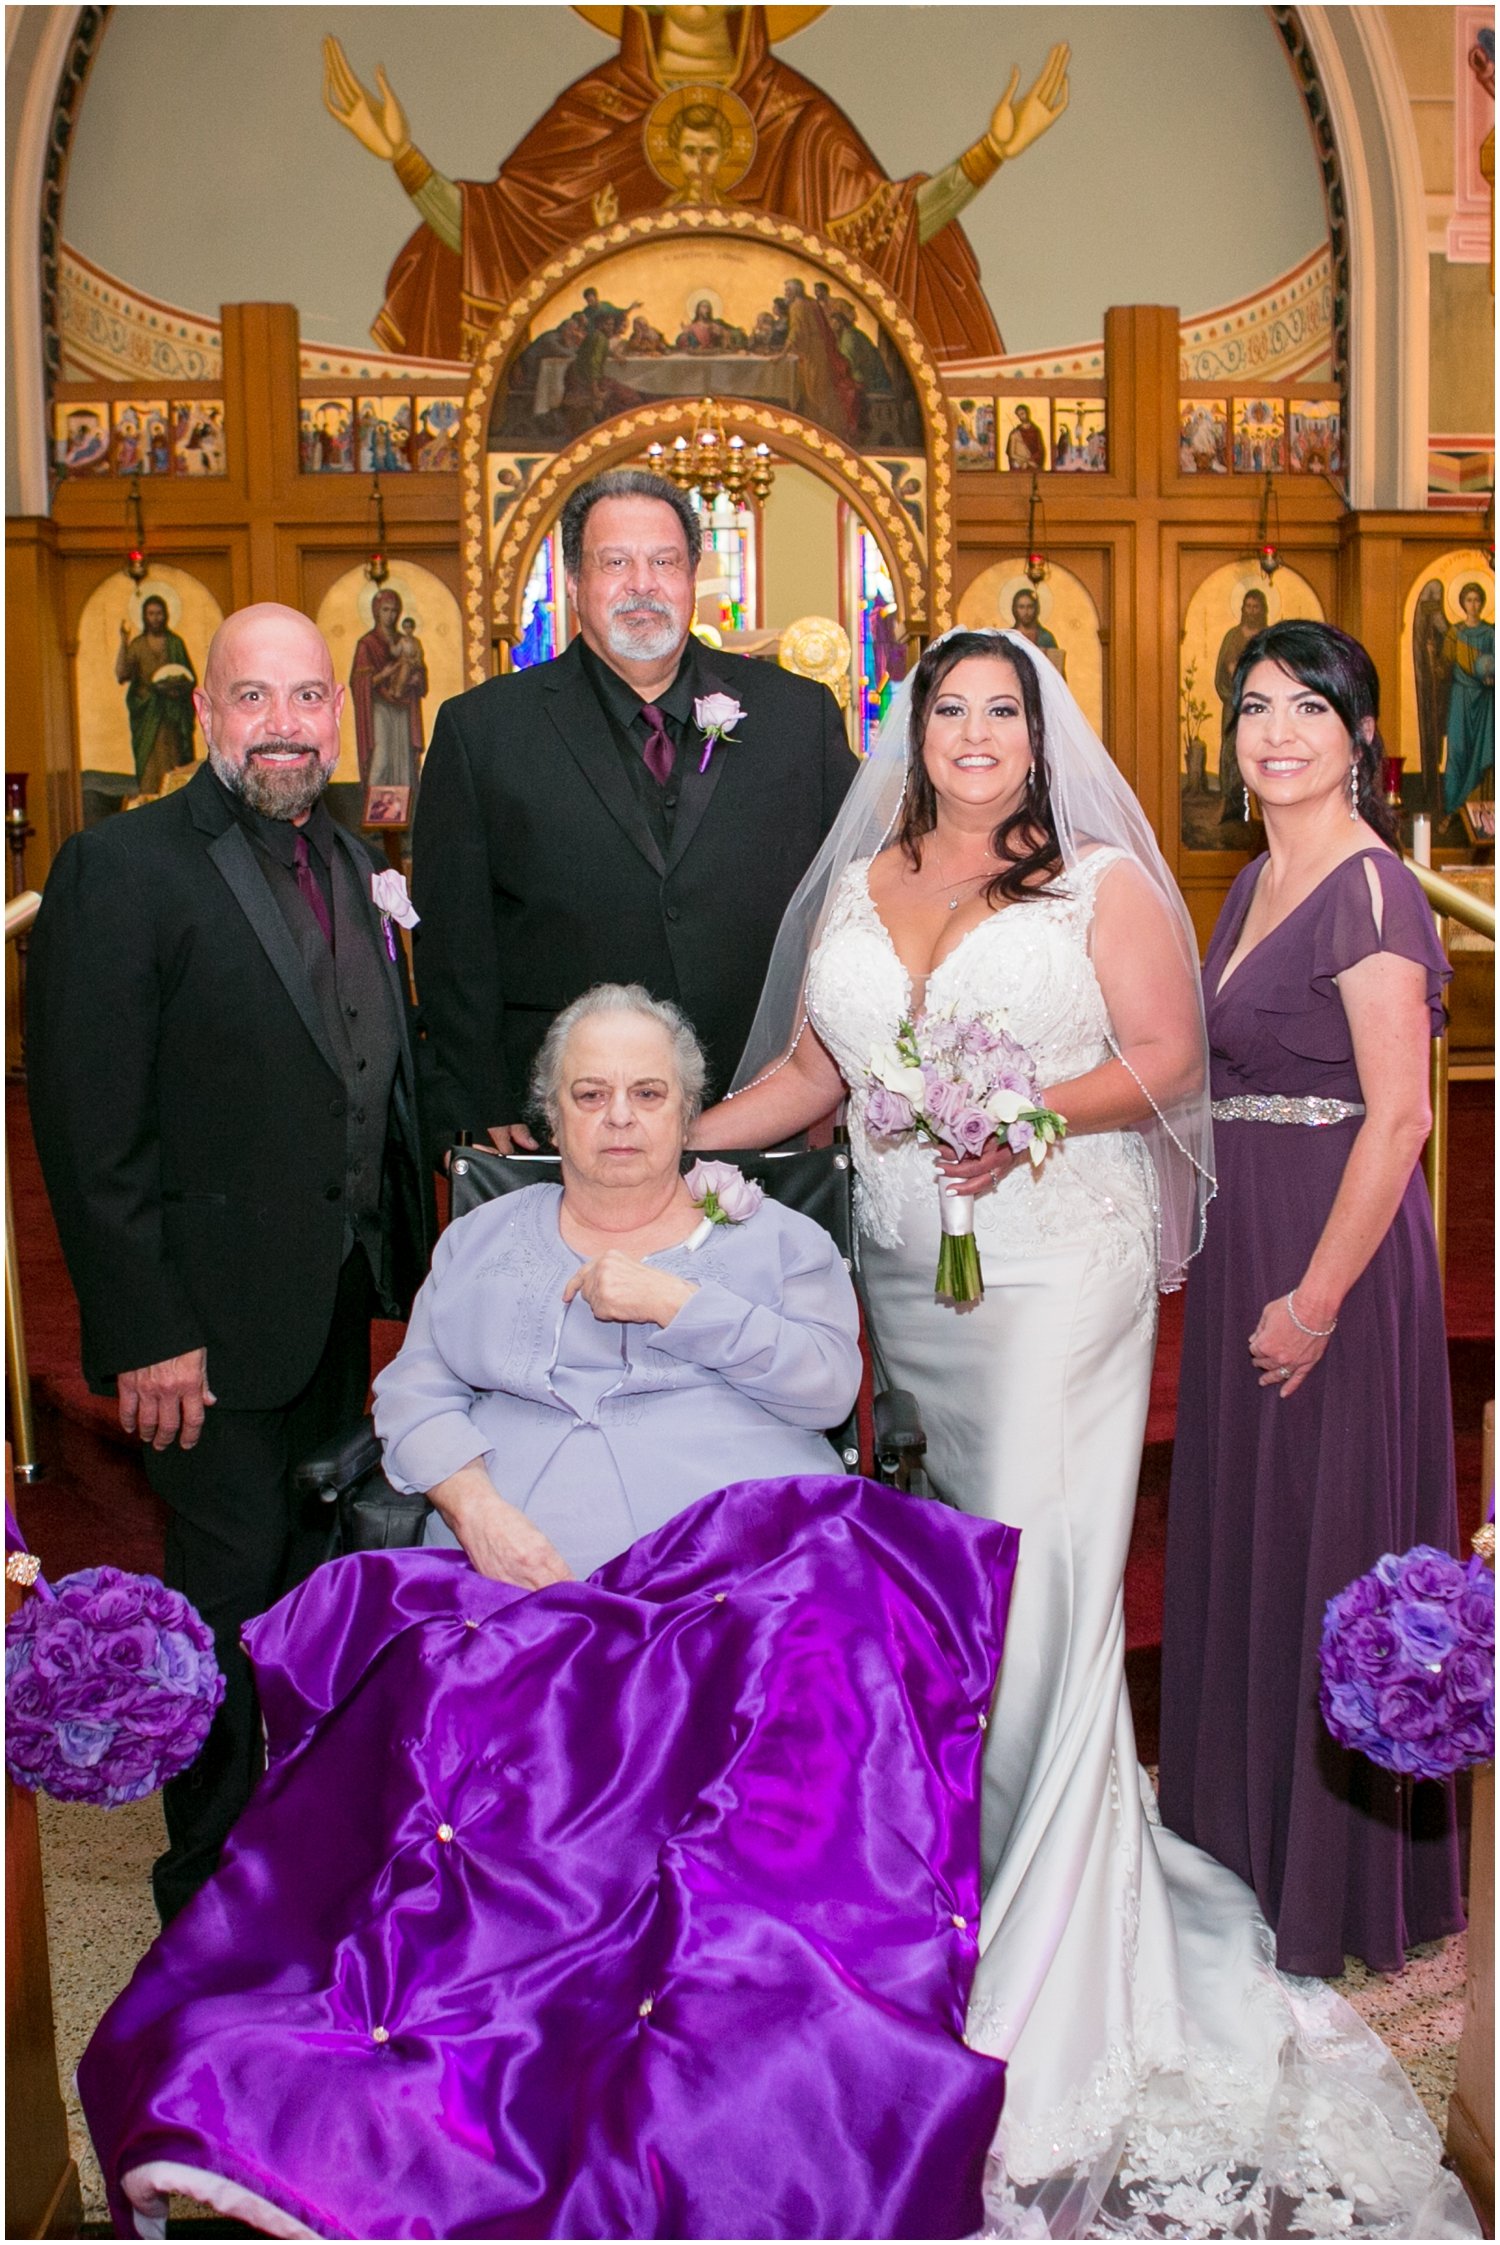 Greek Orthodox Wedding |Tampa Photographer_0019.jpg